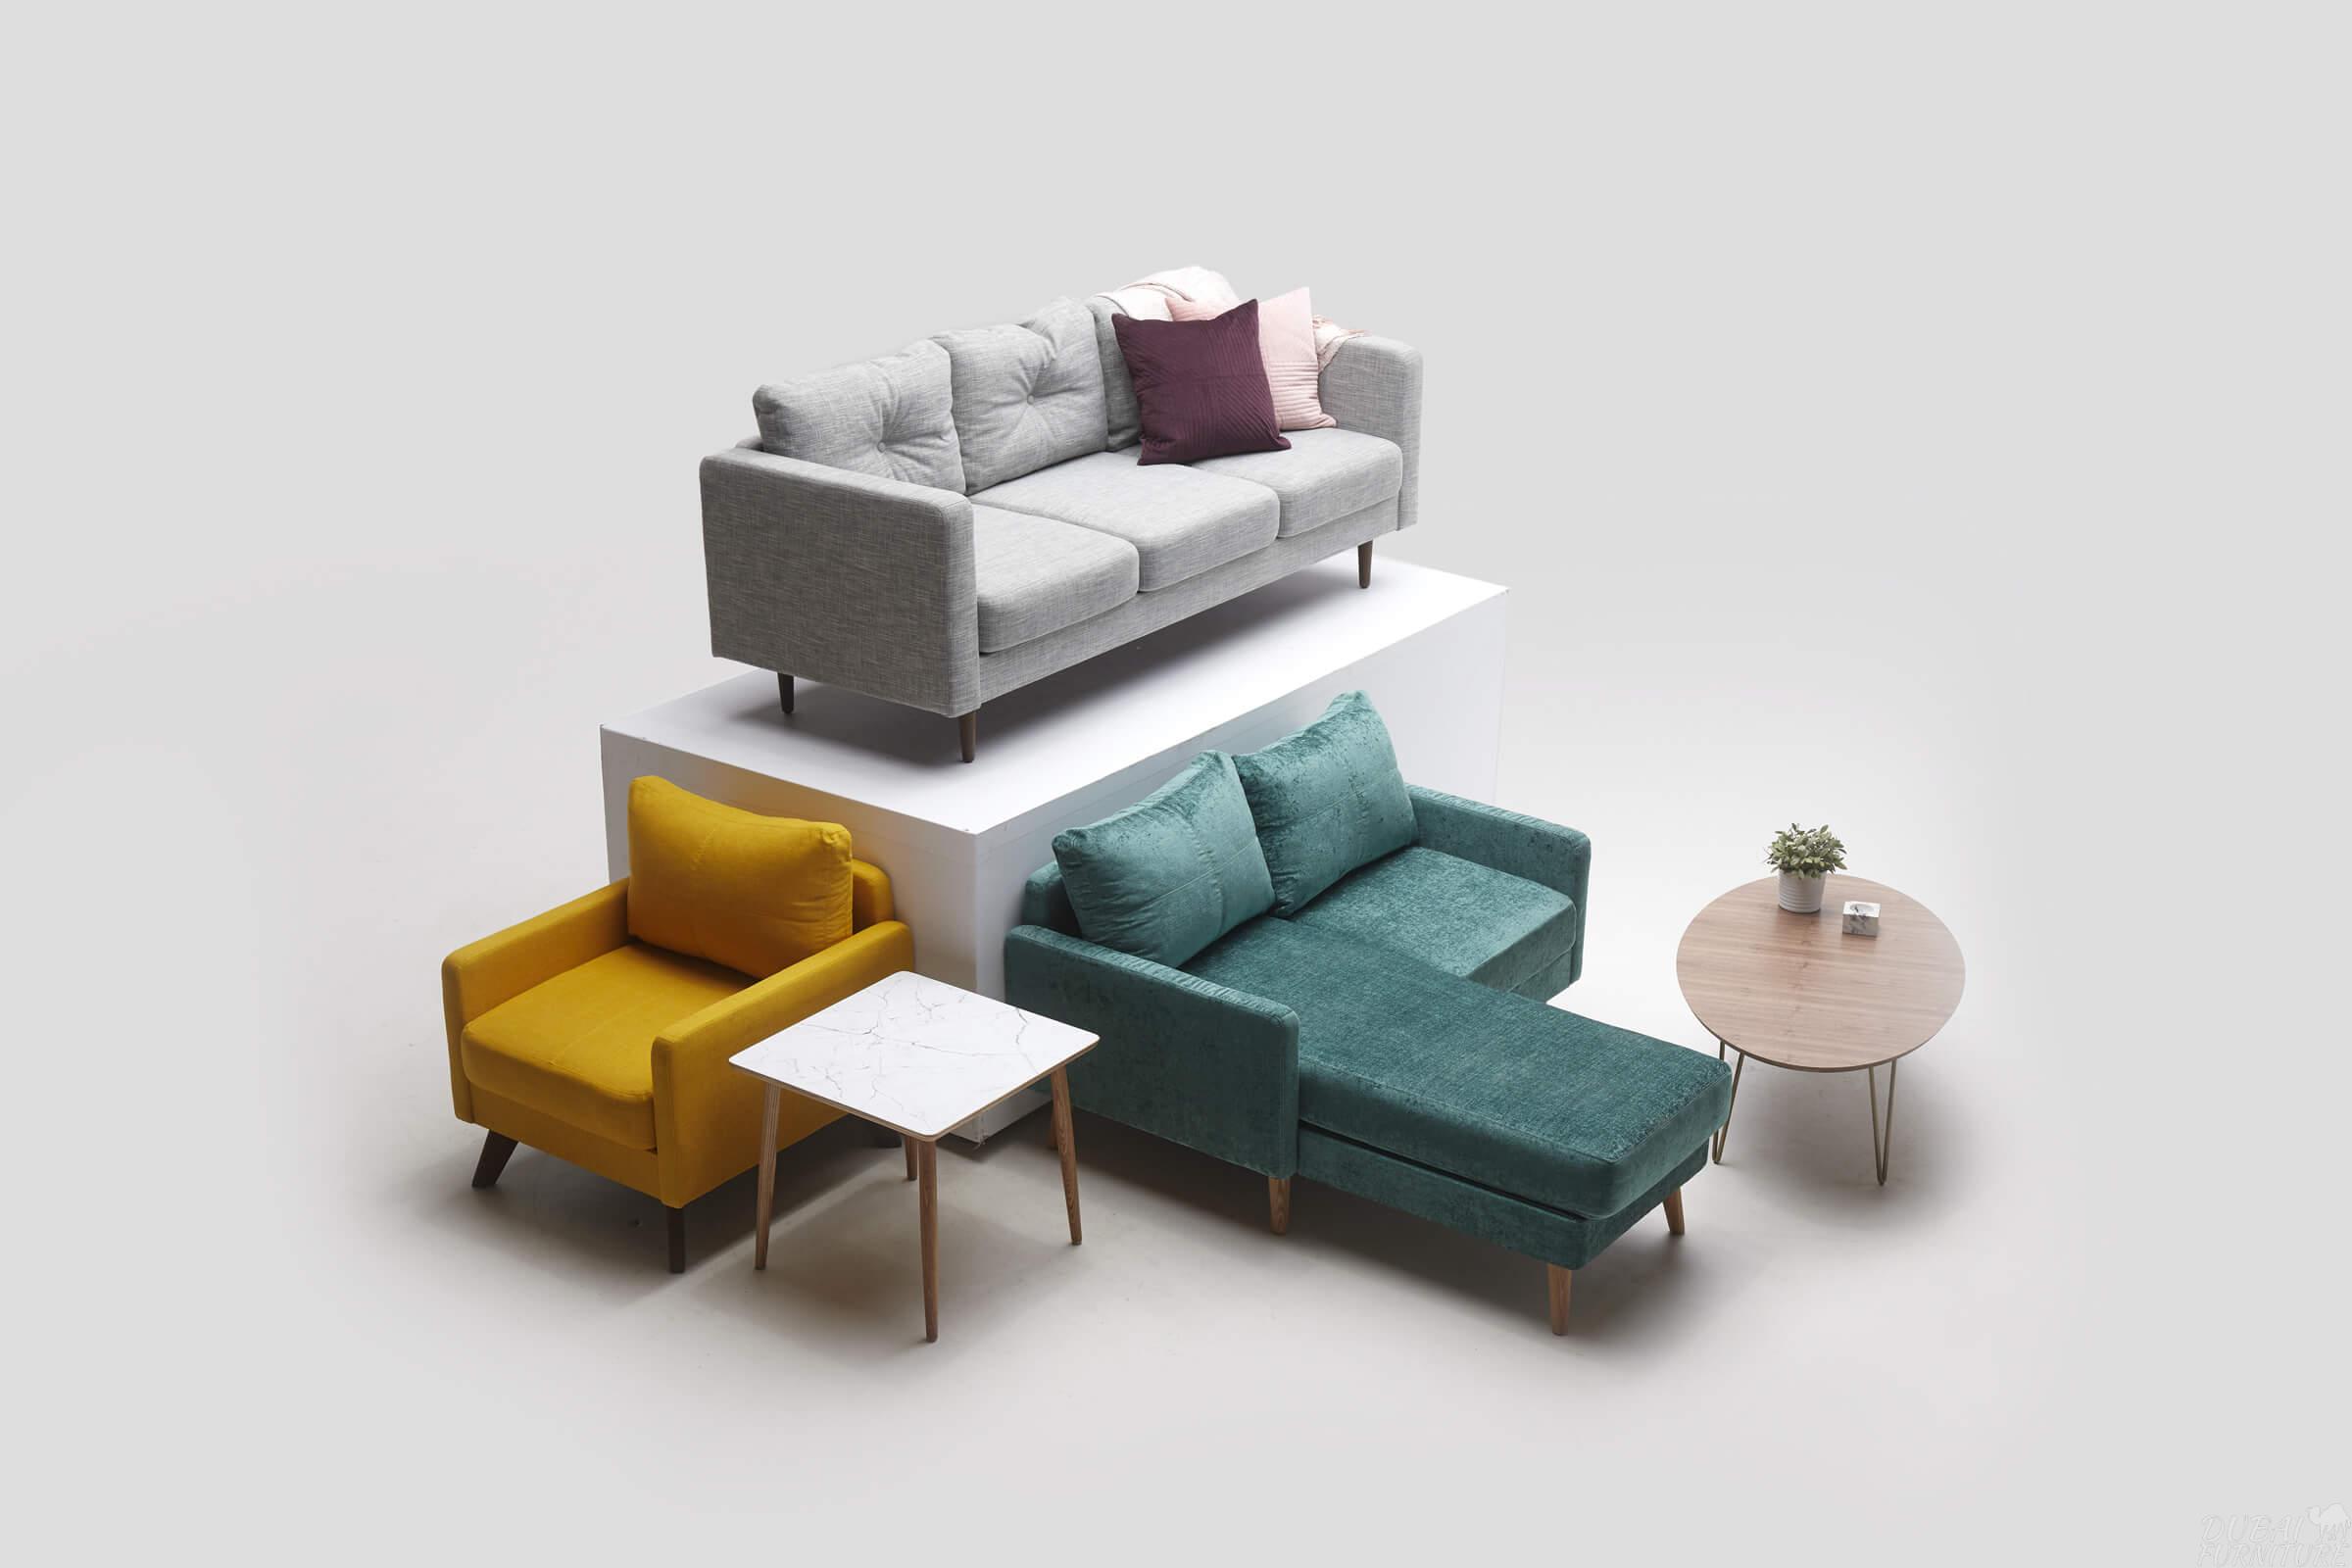 Custom Made Furniture in Dubai: Unleash Your Dream Home!